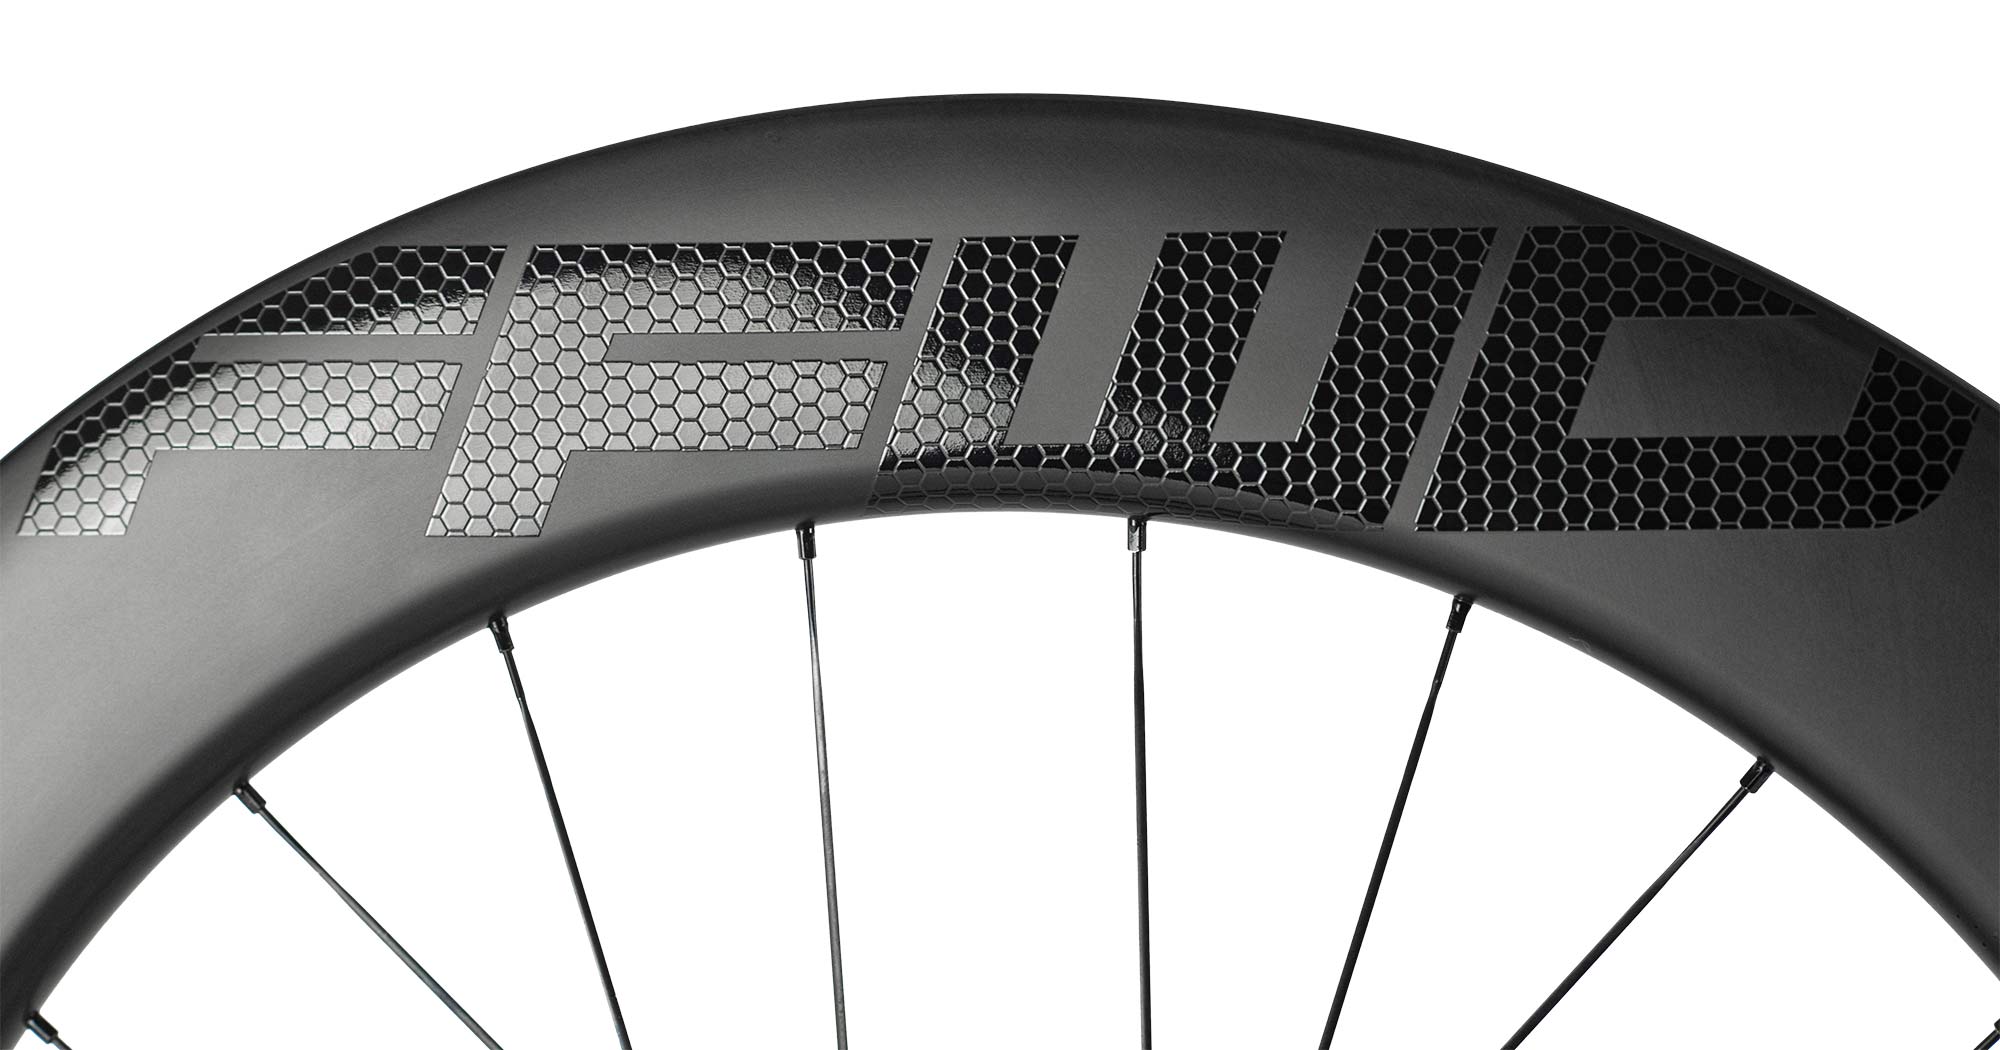 FFWD RYOT77 deep aero carbon tubeless disc brake TT time trial triathlon crit road wheels, rim